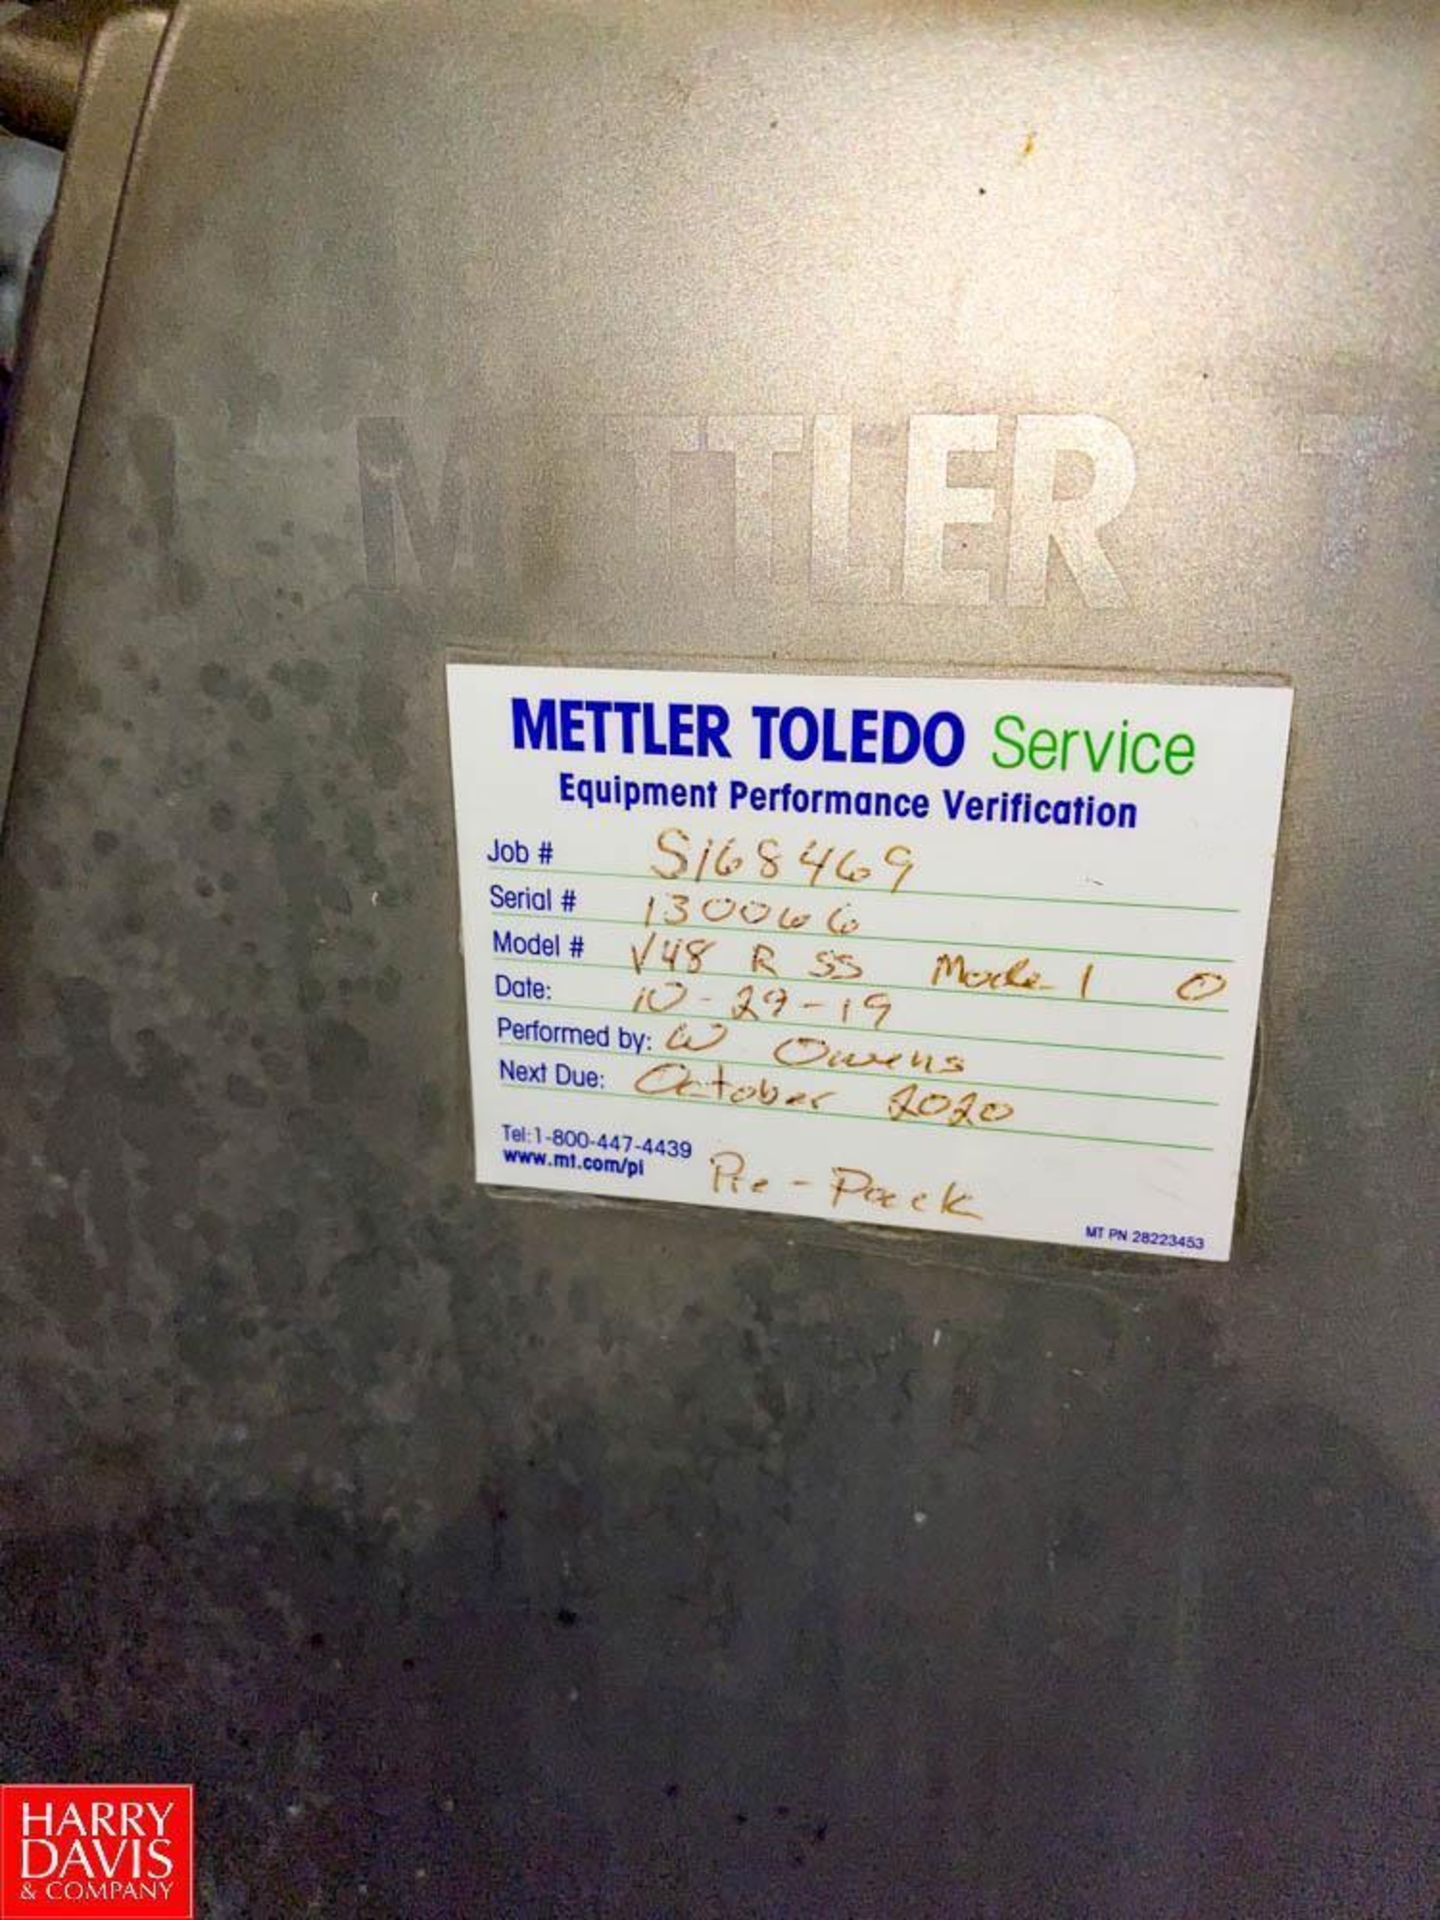 Mettler Toledo Safeline Metal Detector, Model: V48R55, S/N 130066 10" x 4.75" Aperture with Conveyor - Image 2 of 3